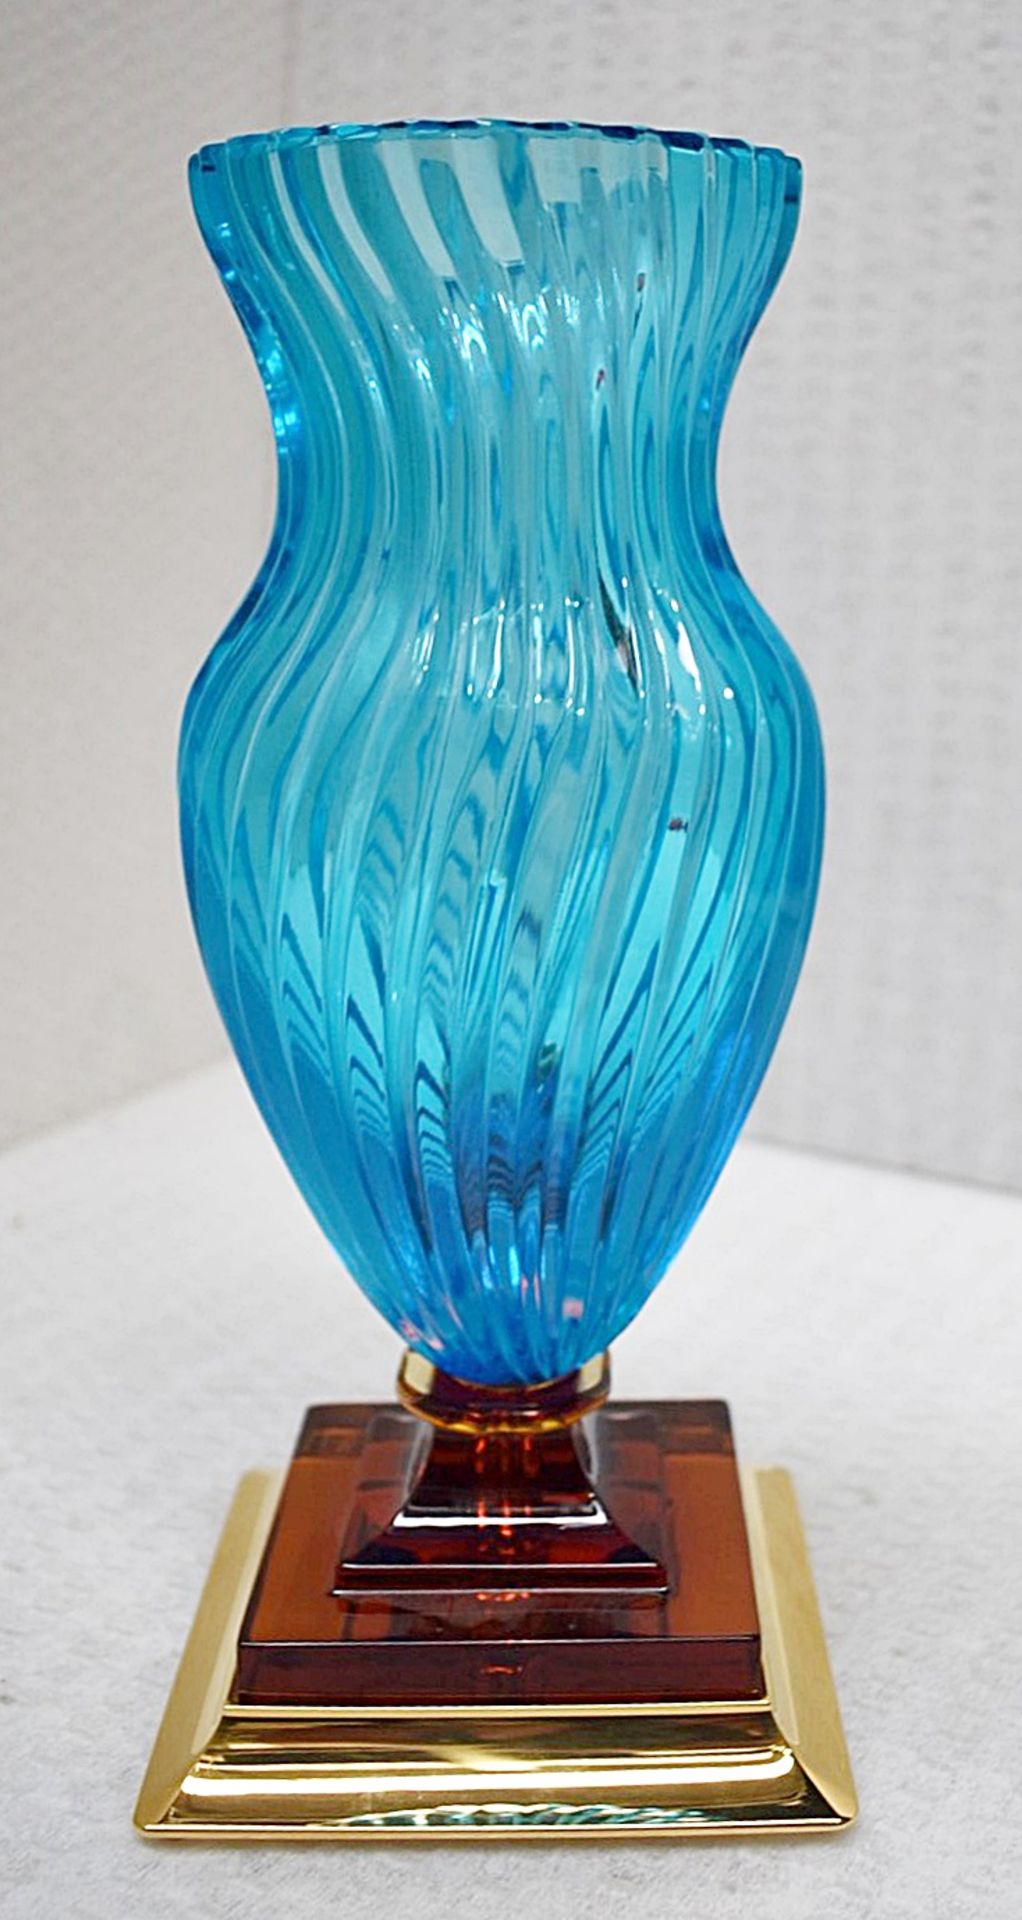 1 x BALDI 'Home Jewels' Italian Hand-crafted Artisan 'TIEPOLO' Vase **Original RRP £1,520**